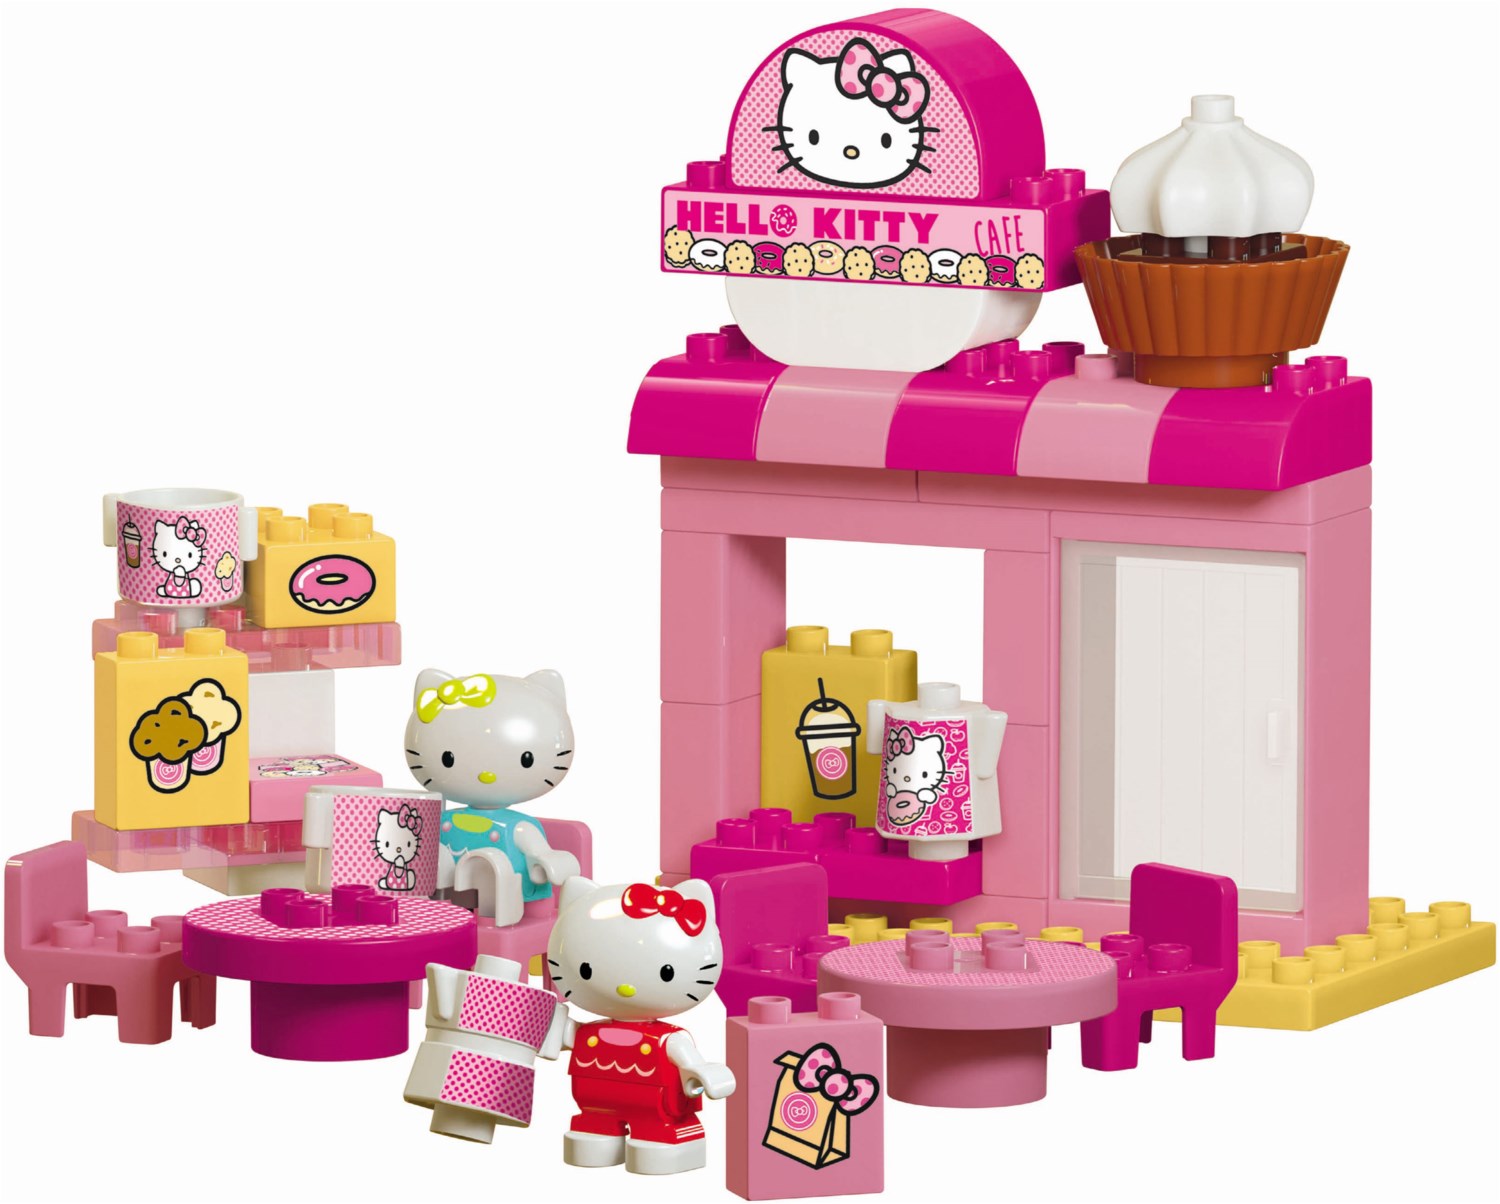 BIG-Bloxx Hello Kitty Cafe Sonstiges Kinderspielzeug